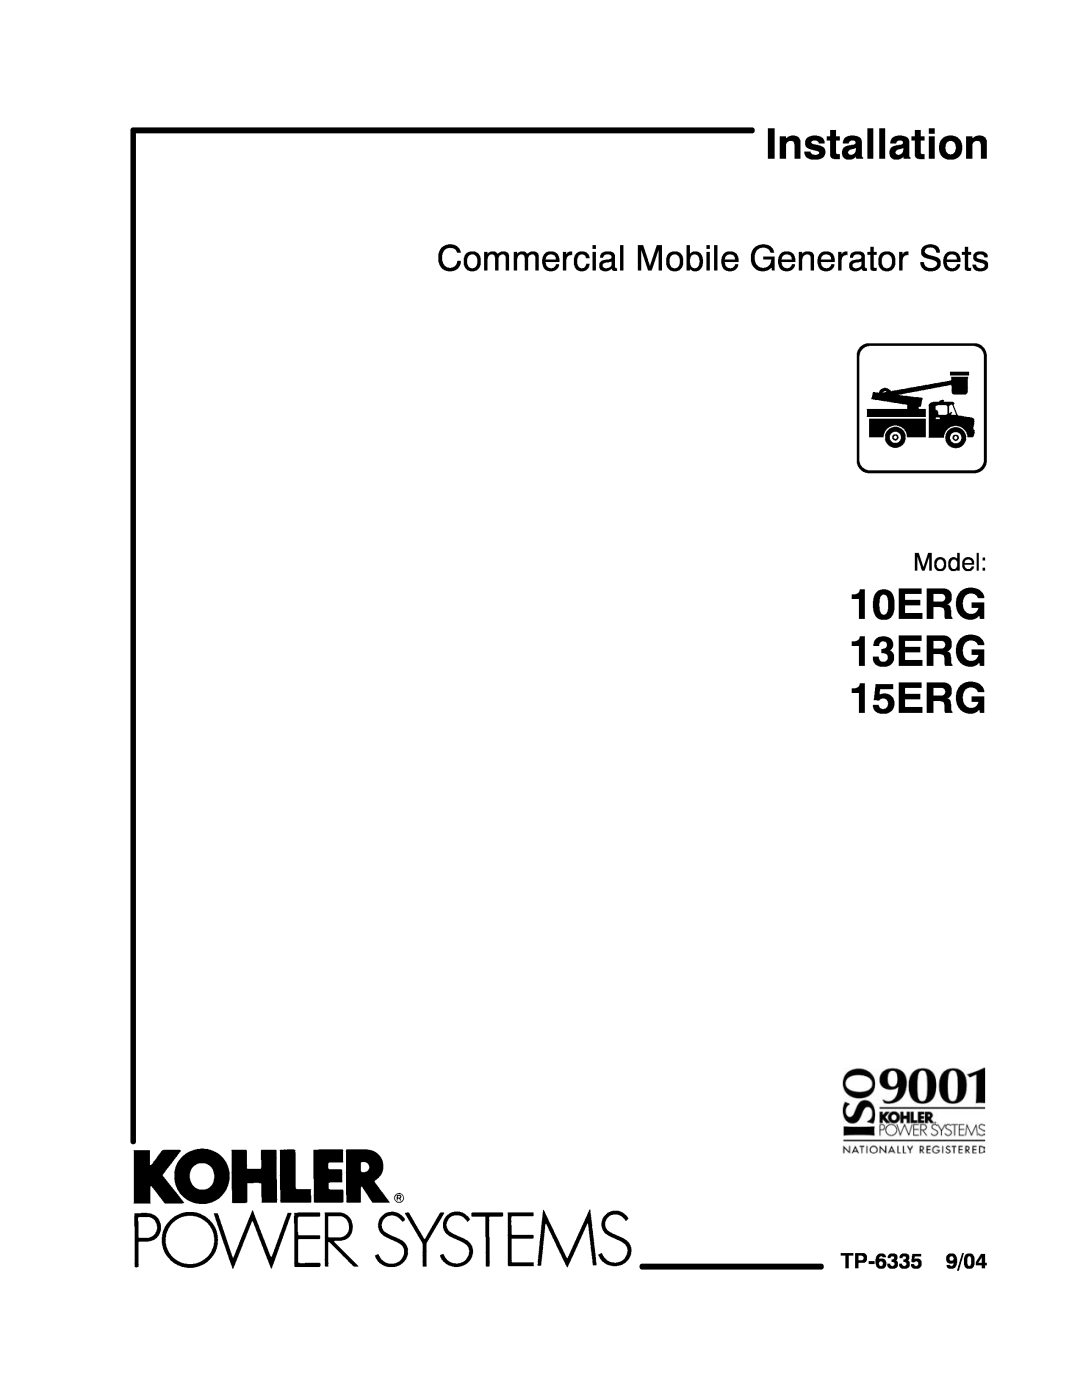 Kohler manual Model, TP-6335 9/04, Installation, 10ERG 13ERG 15ERG, Commercial Mobile Generator Sets 